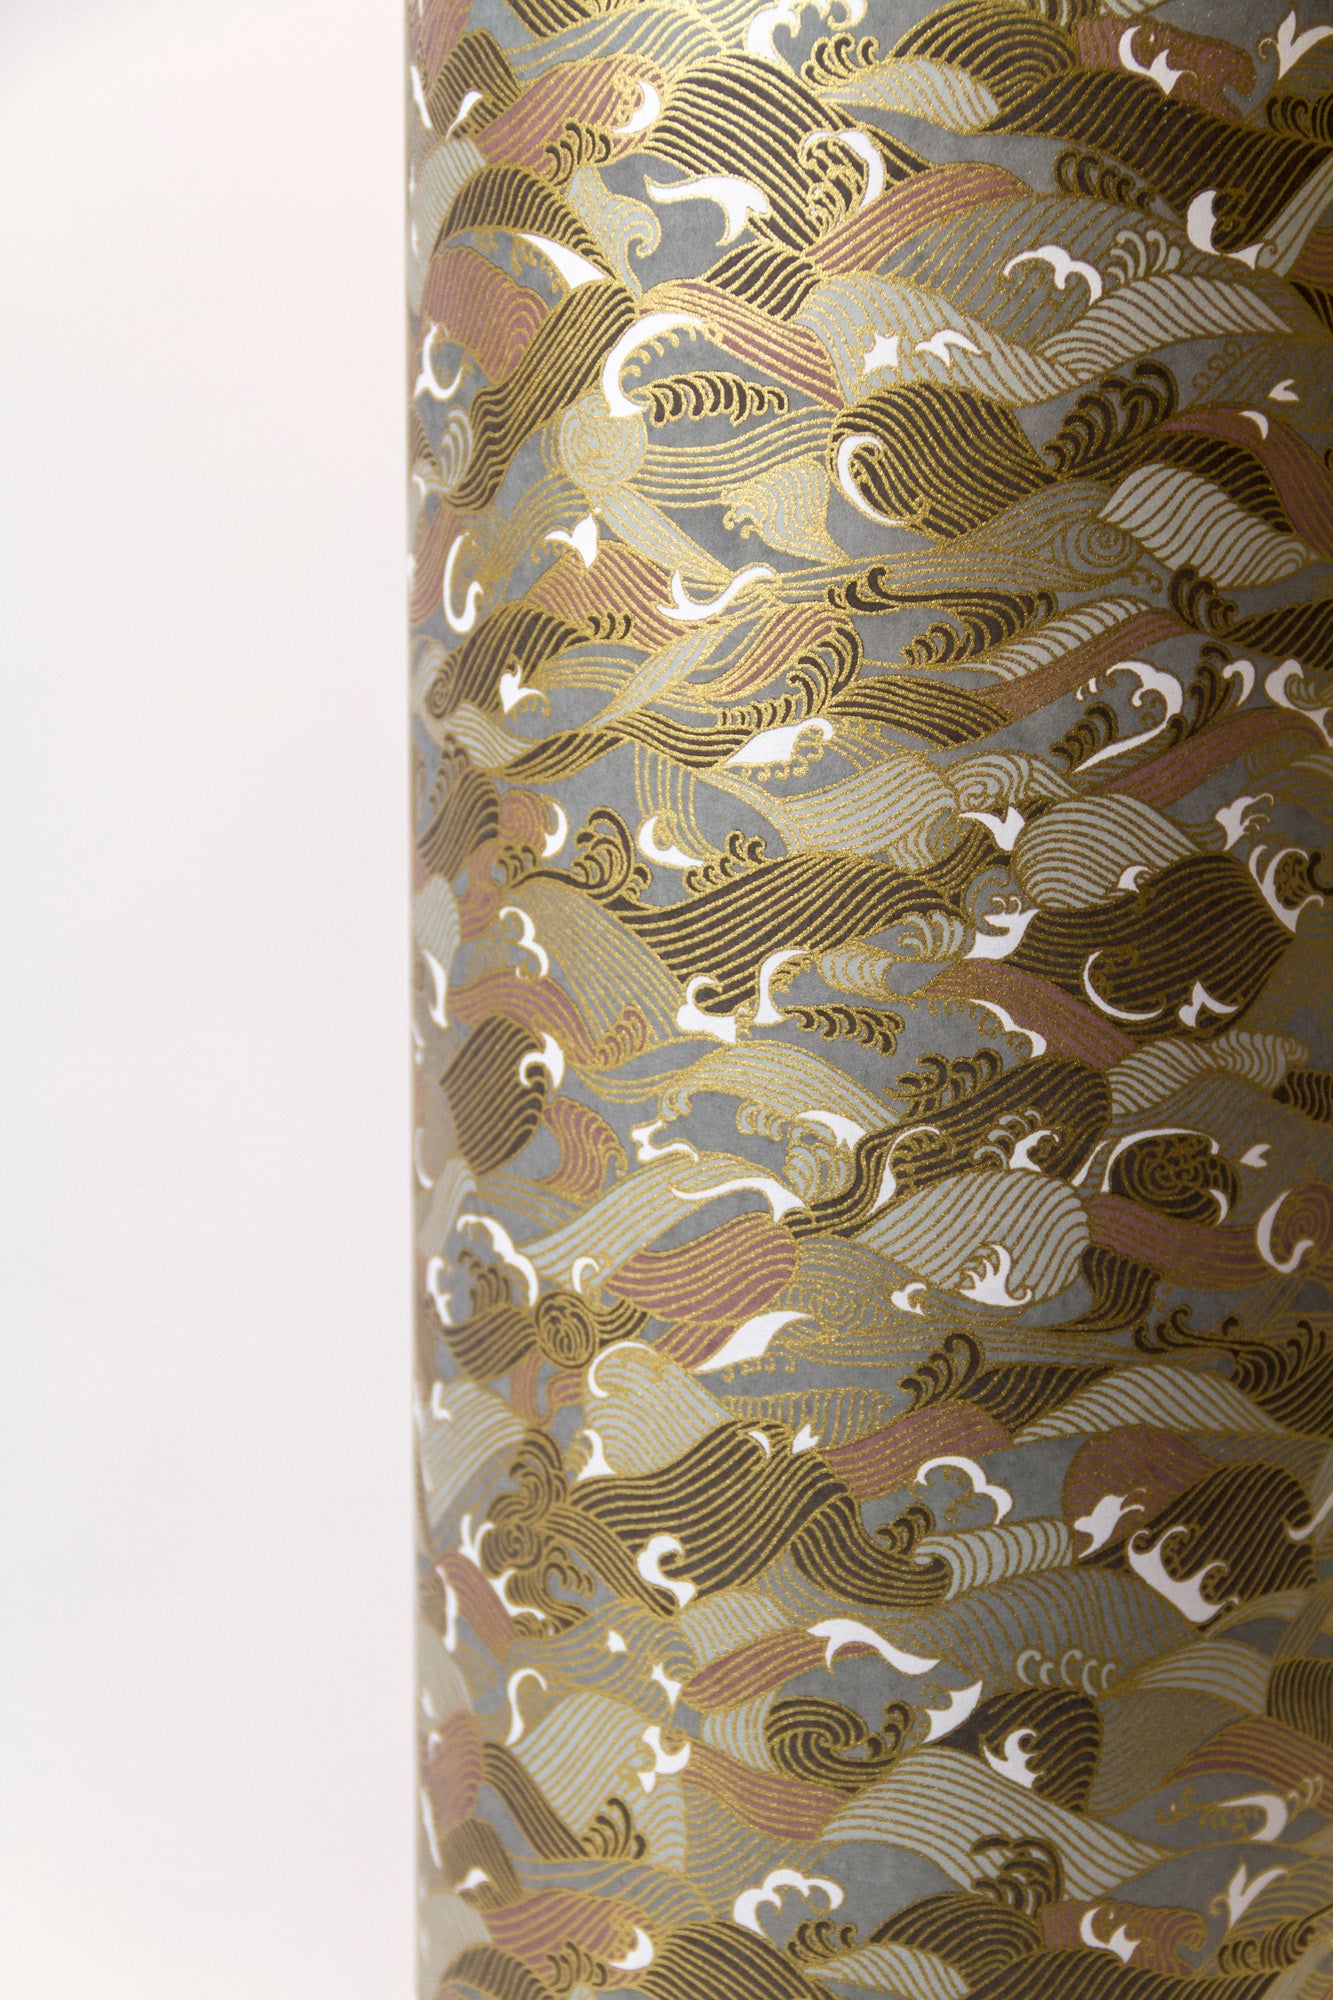 3 Tier Lamp Shade - W03 - Gold Waves on Greys, 40cm x 20cm, 30cm x 17.5cm & 20cm x 15cm